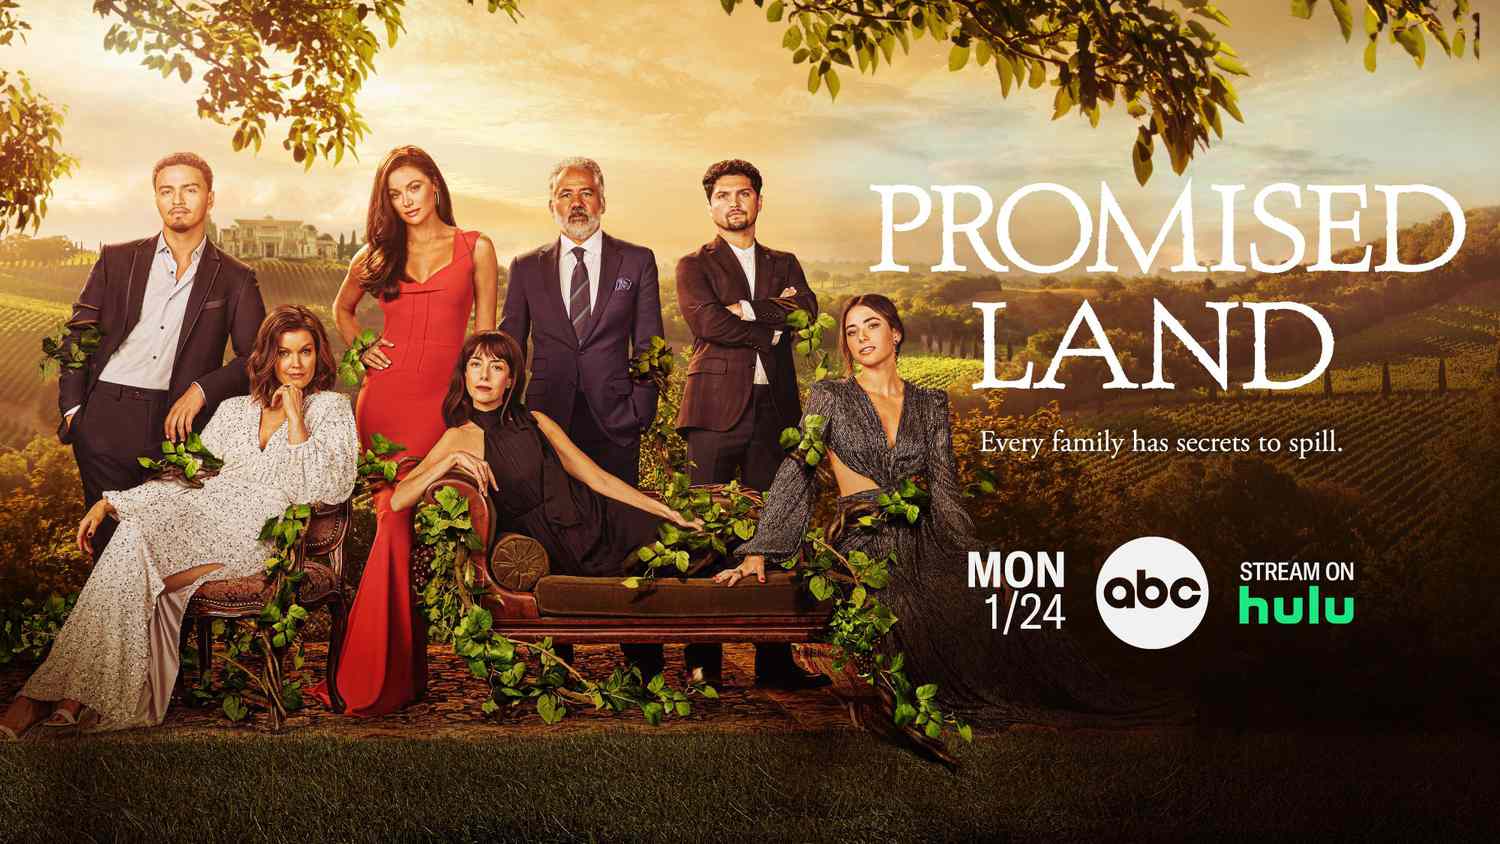 ABC's Latinx show "Promised Land" Promo